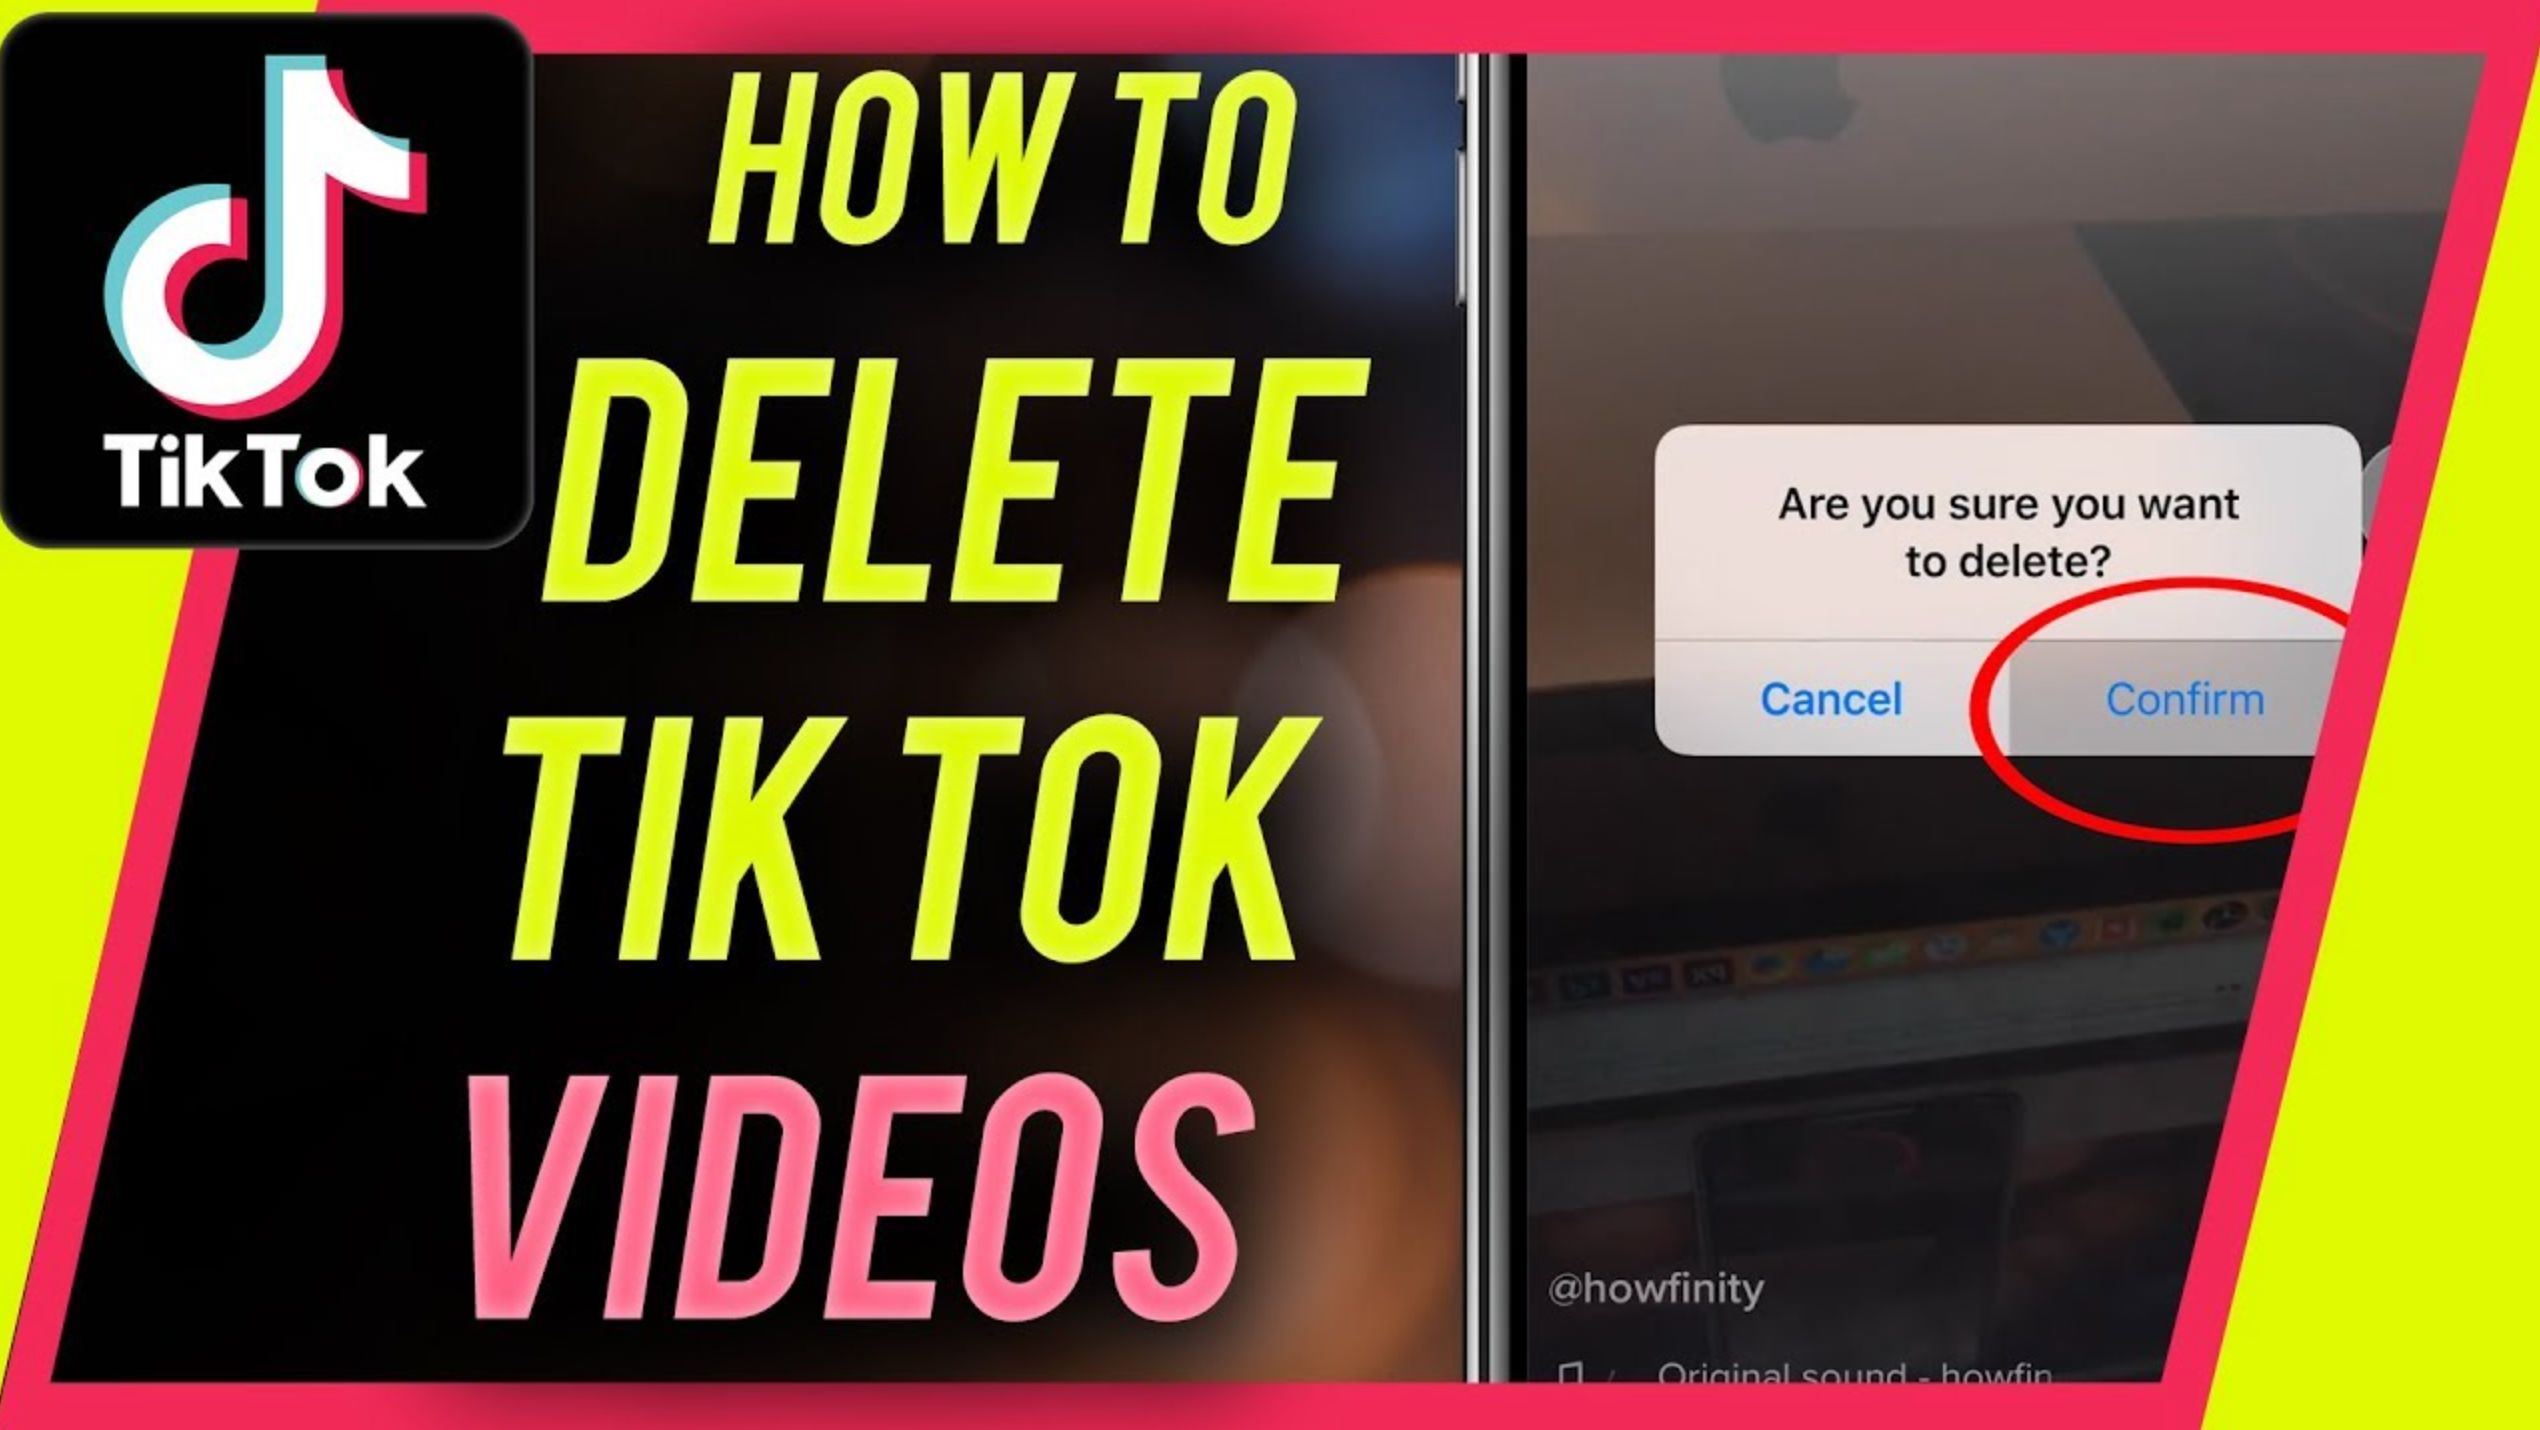 How To Delete a TikTok Video Post